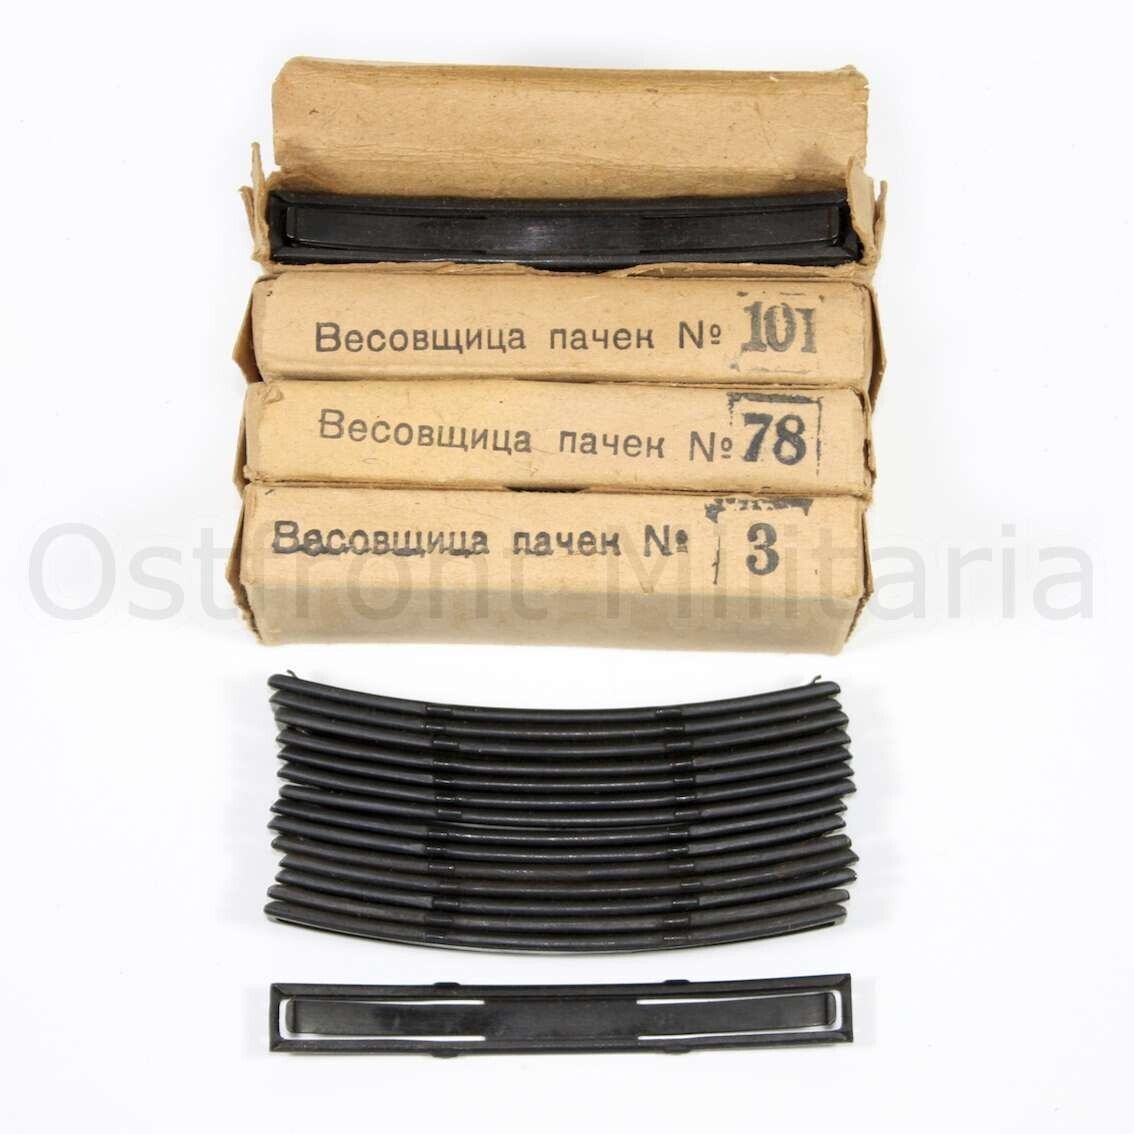 15 pcs Original Soviet SKS stripper clips 7.62x39 Unissued condition Marked